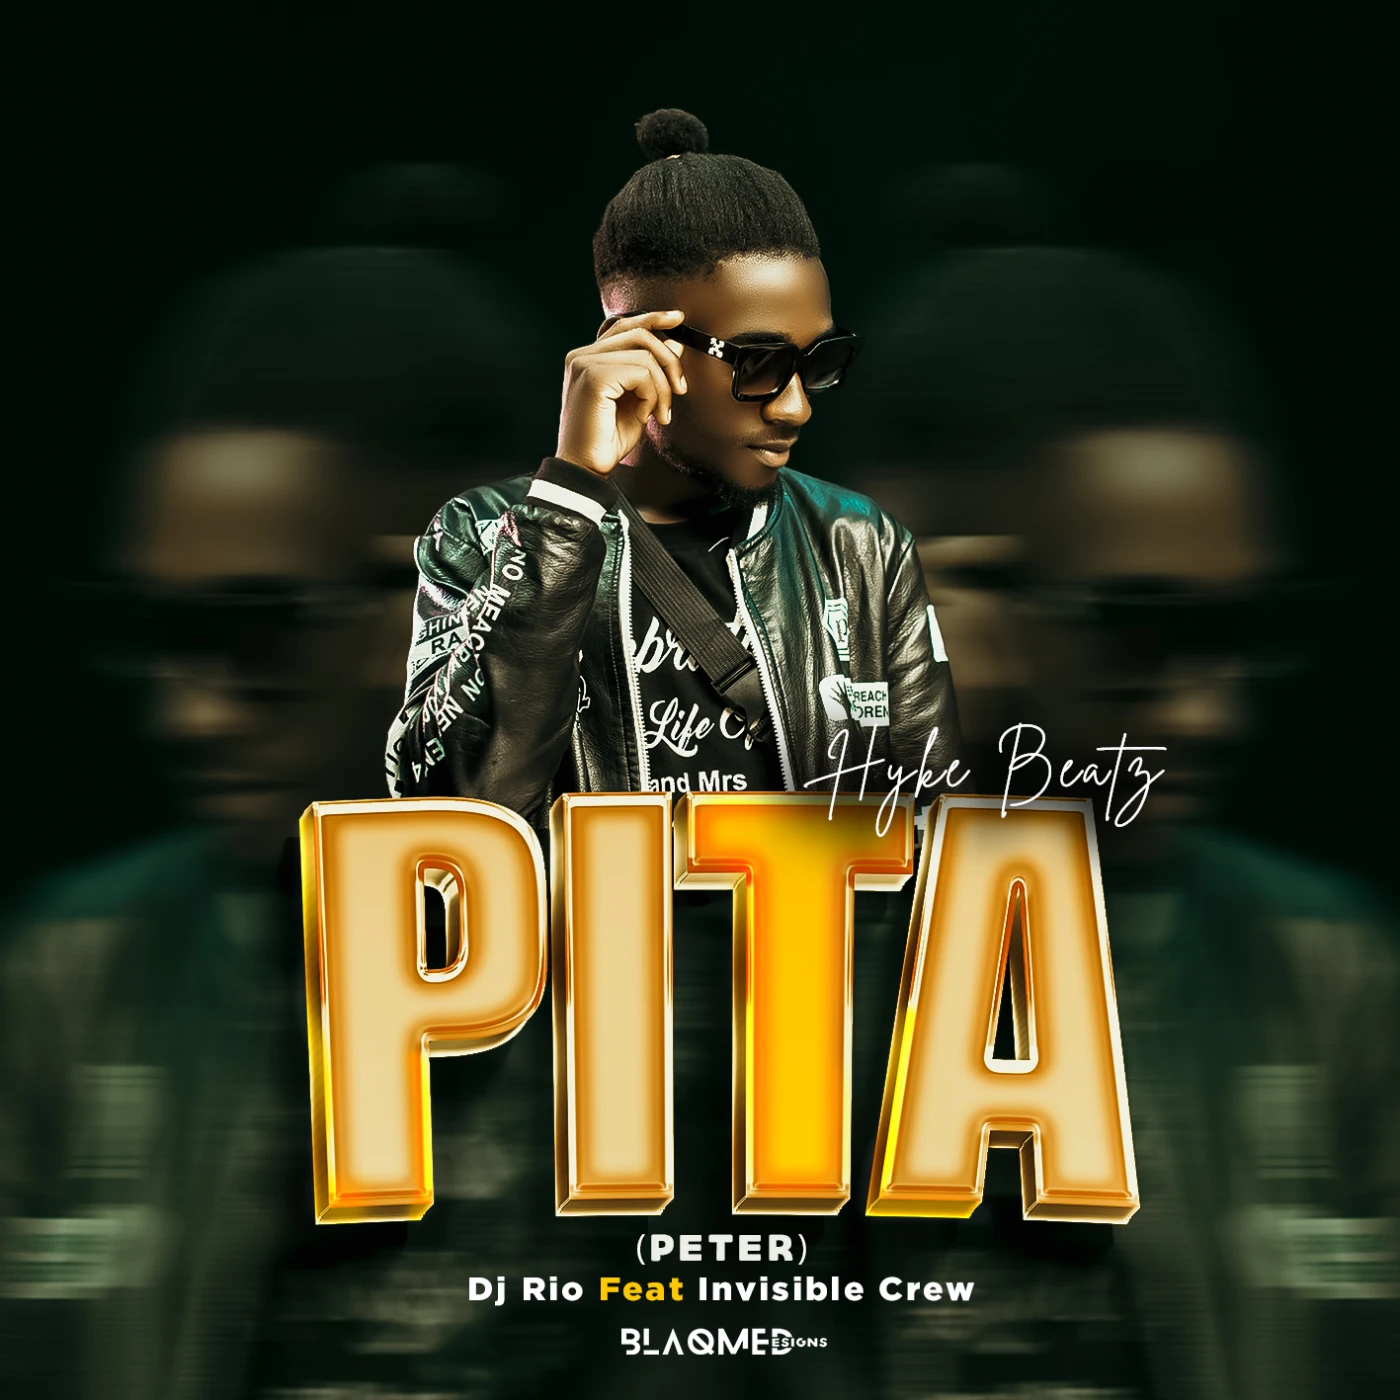 Pita (Peter) ft DJ Rio & invisible crew